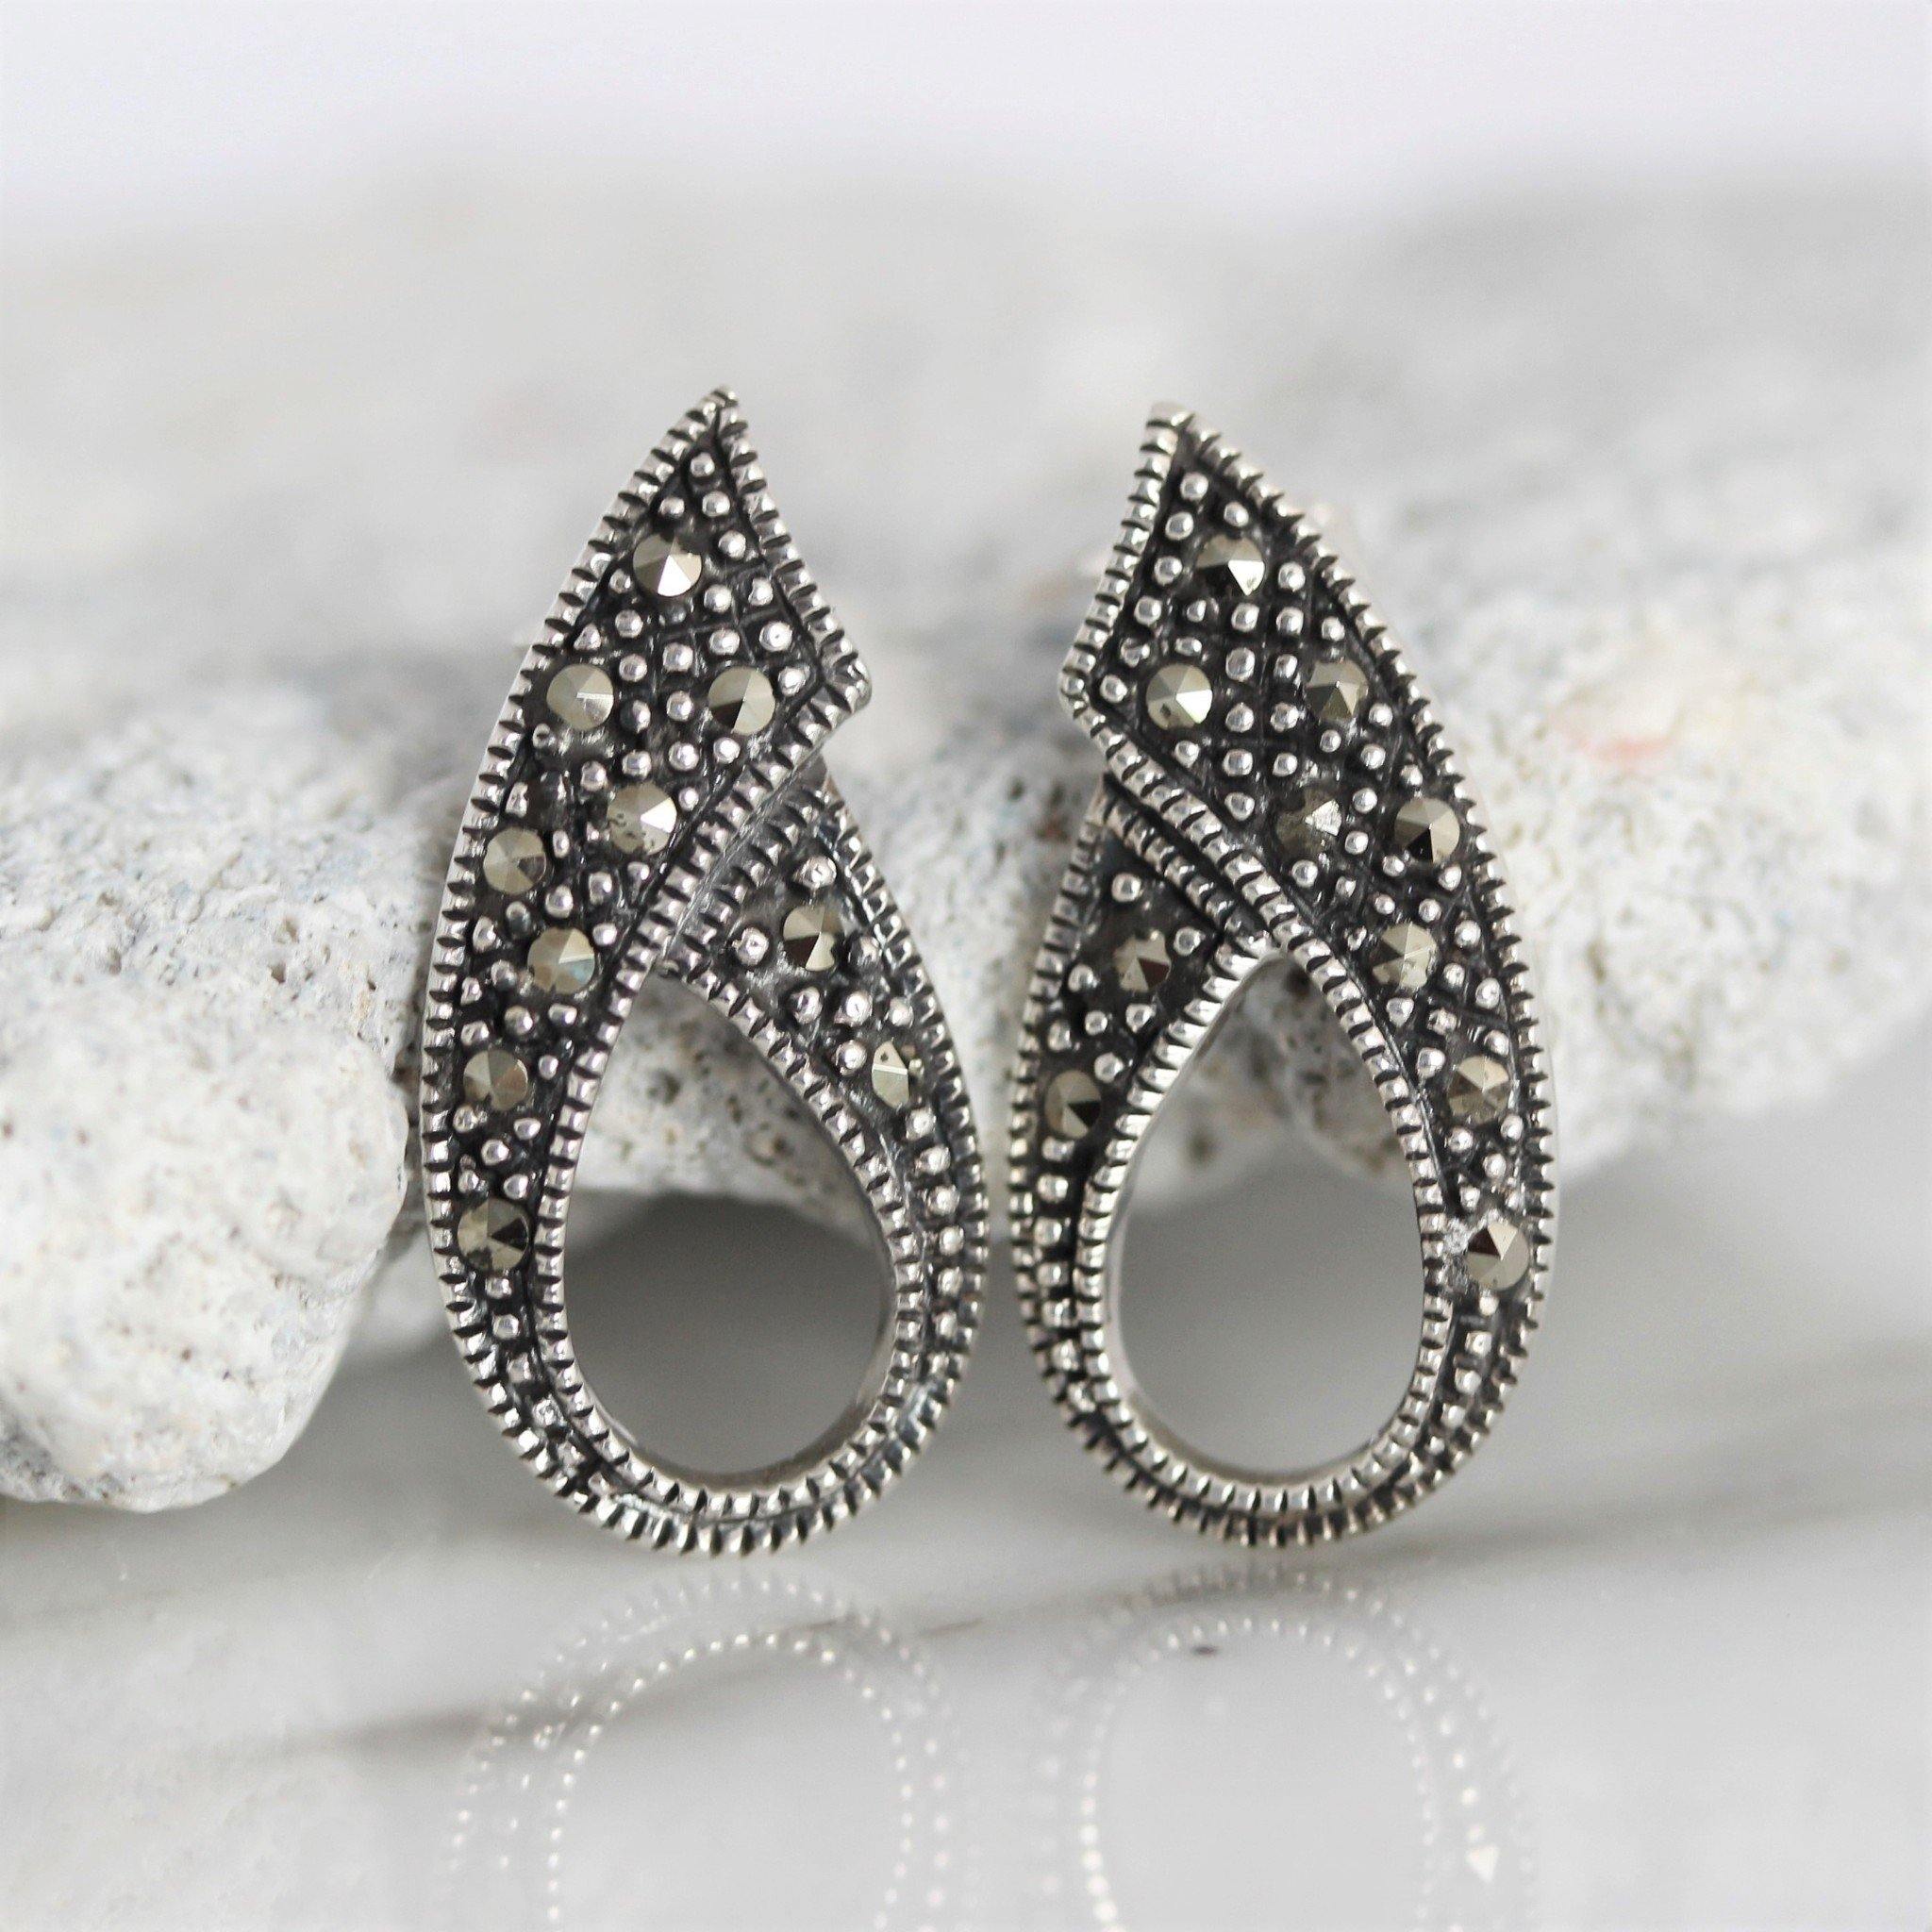 Sterling Silver Big Marcasite Stud Earrings Vintage Inspired - STERLING SILVER DESIGNS